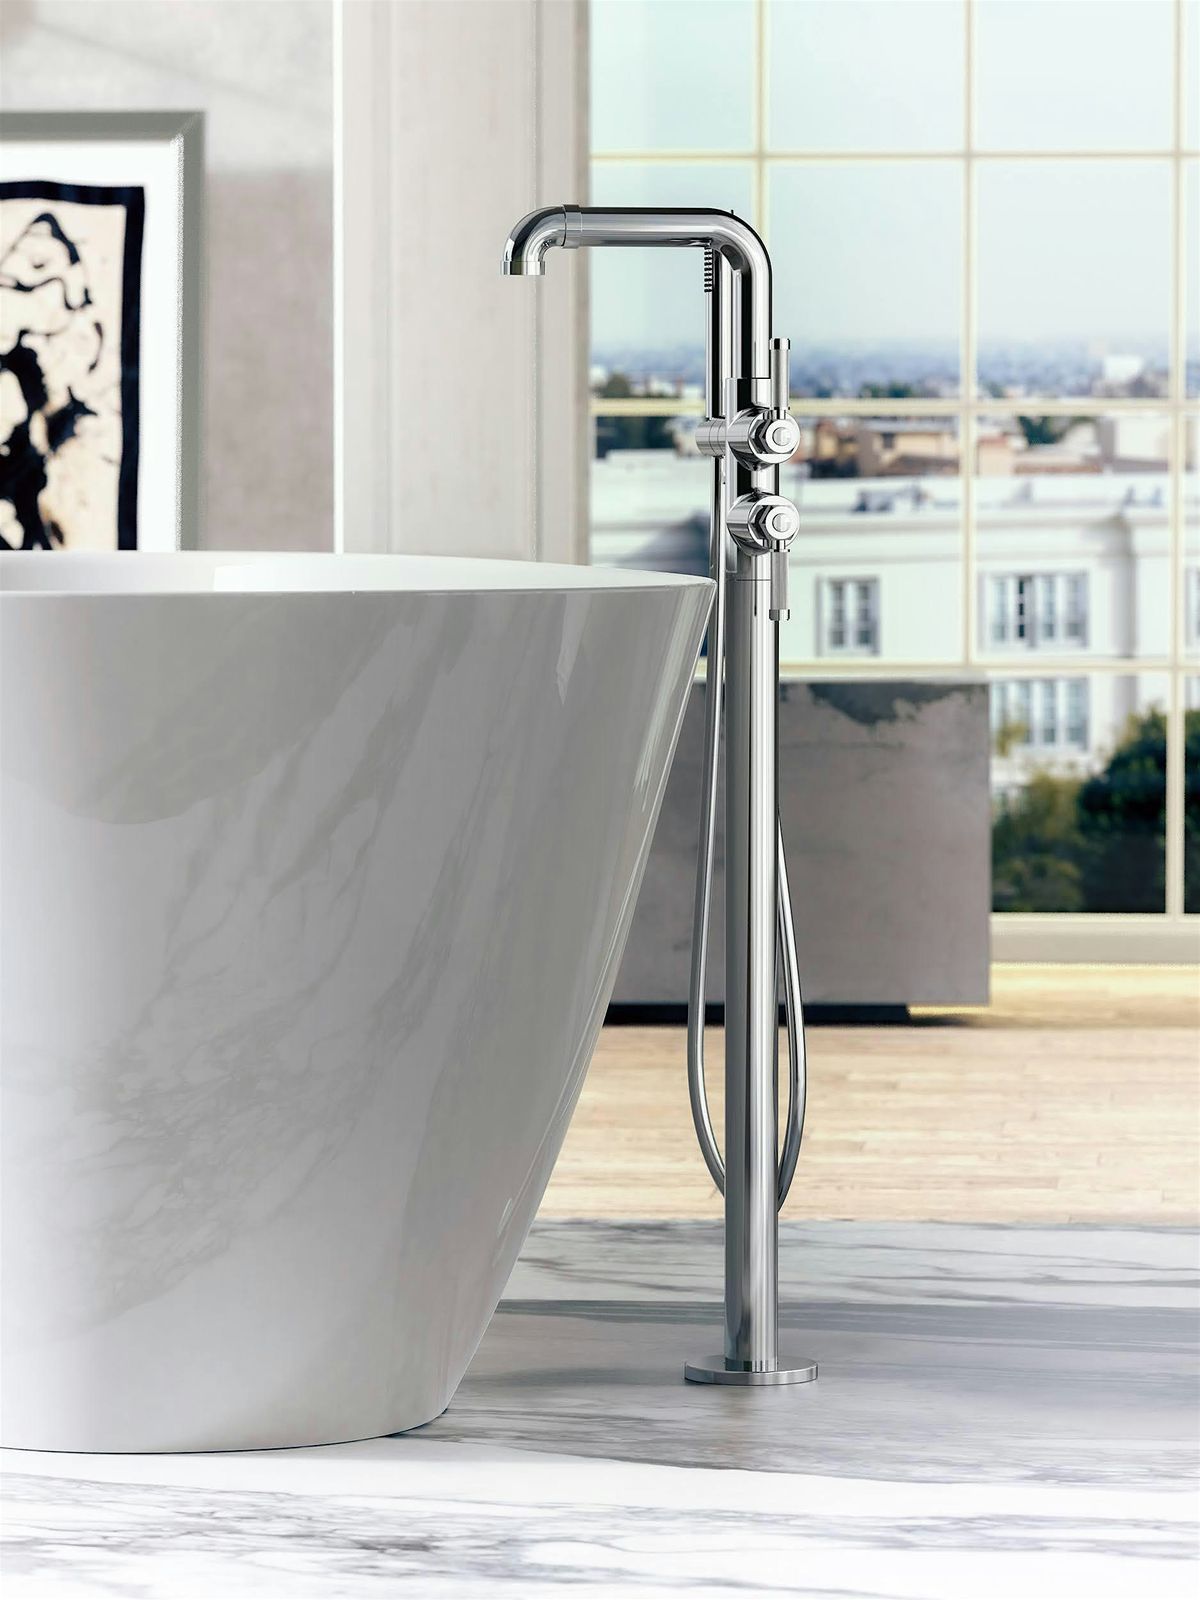 Bathrooms a source of Design Inspiration